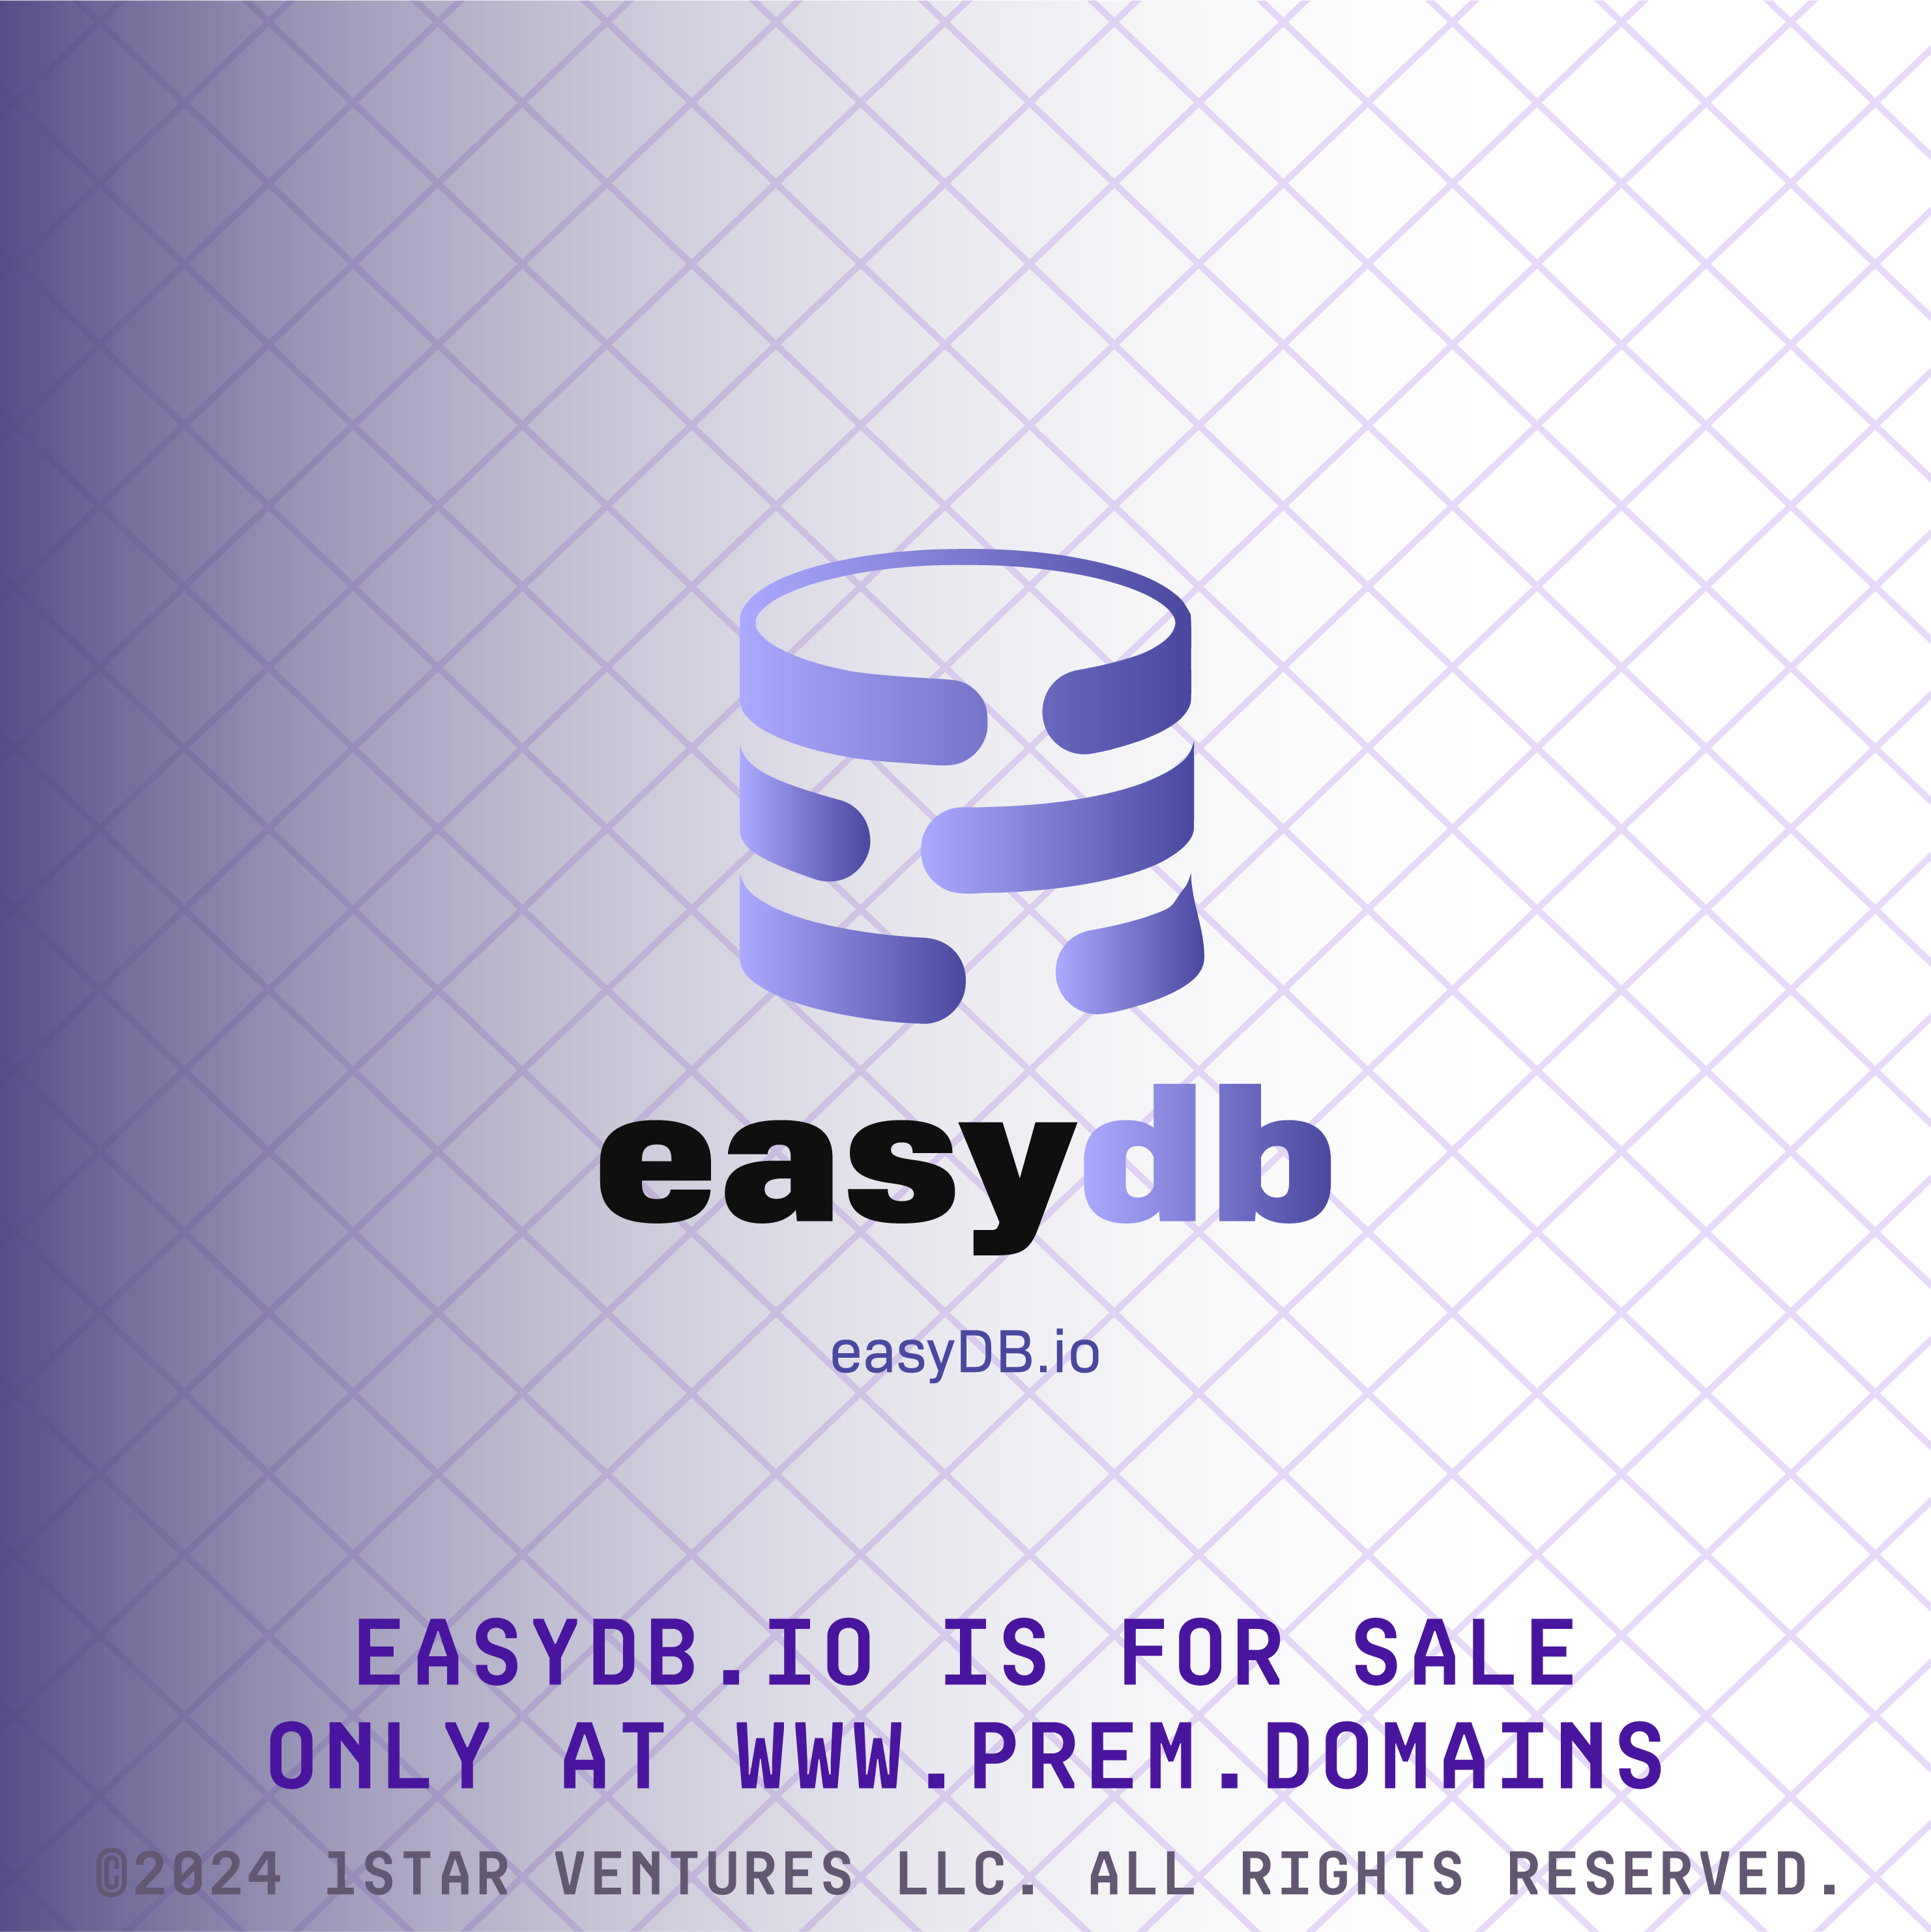 easydb.io custom logo product card image